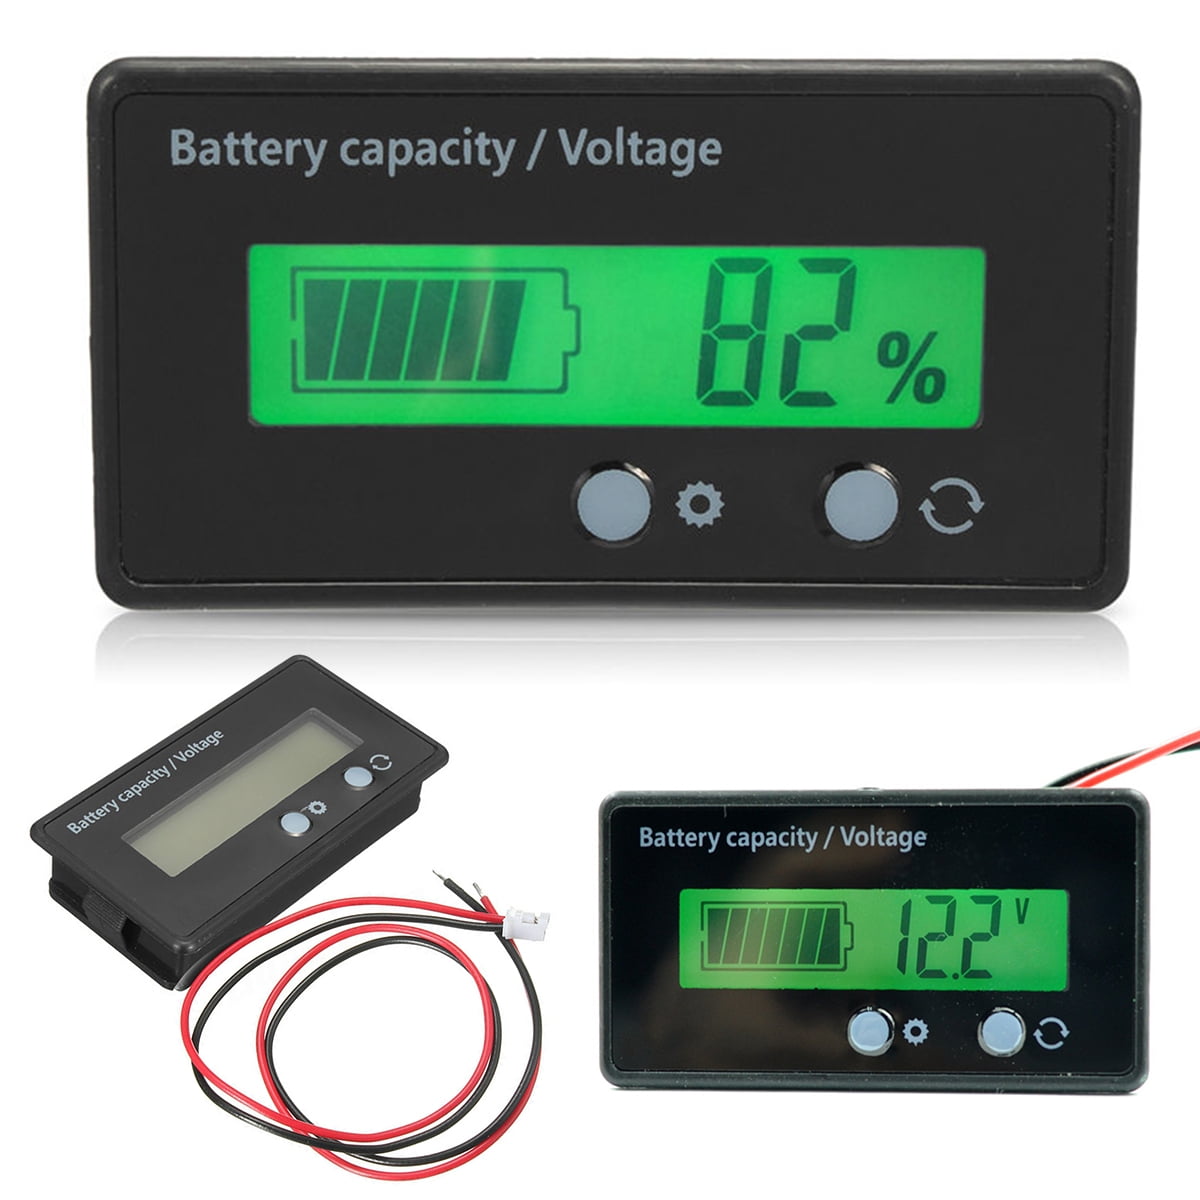 12V 24V 36V 48V battery capacity indicator Voltage Meter with LCD Display Green Backlight，Waterproof Monitor Gauge digital voltmeter Tester for 2S-15S Lithium Batteries and Lead-acid Batteries 